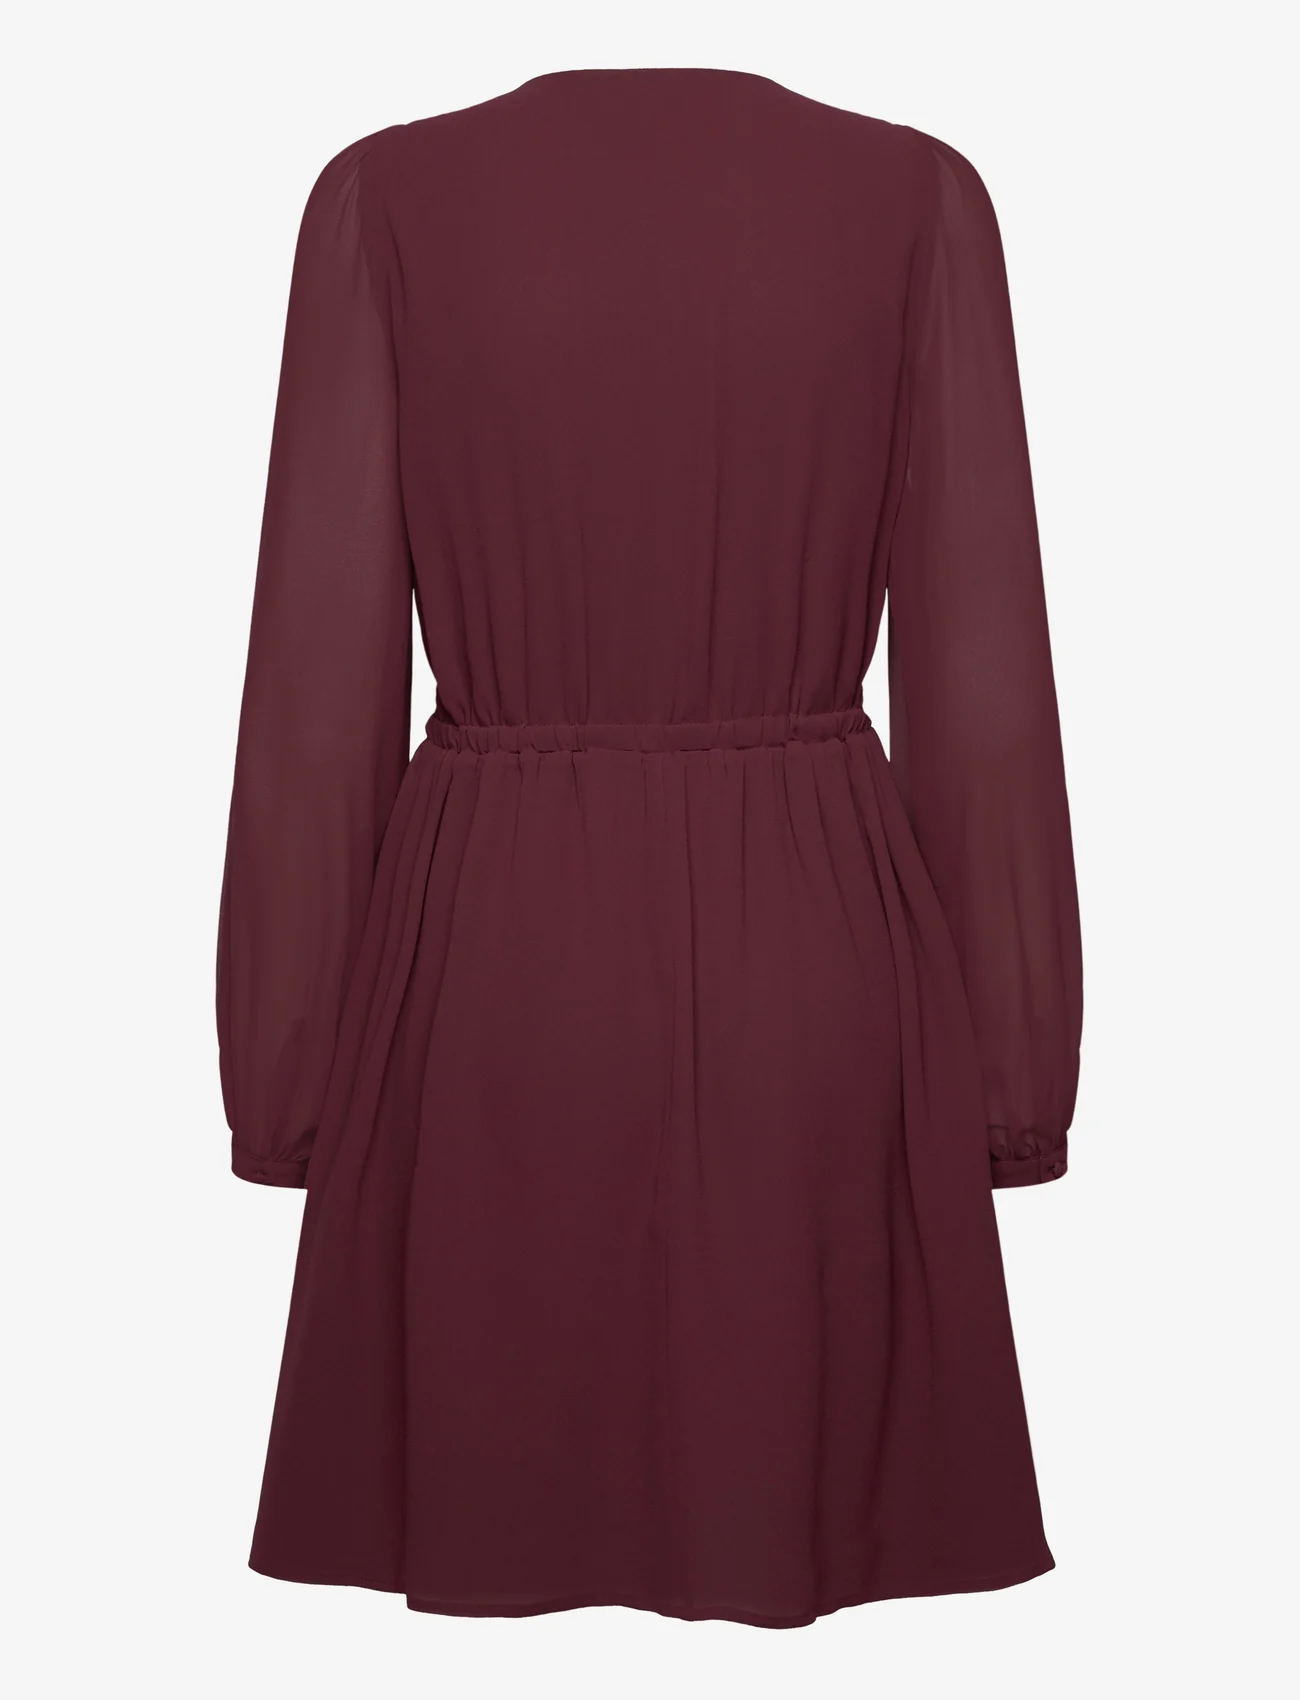 Esprit Casual - Dresses light woven - festtøj til outletpriser - bordeaux red - 1